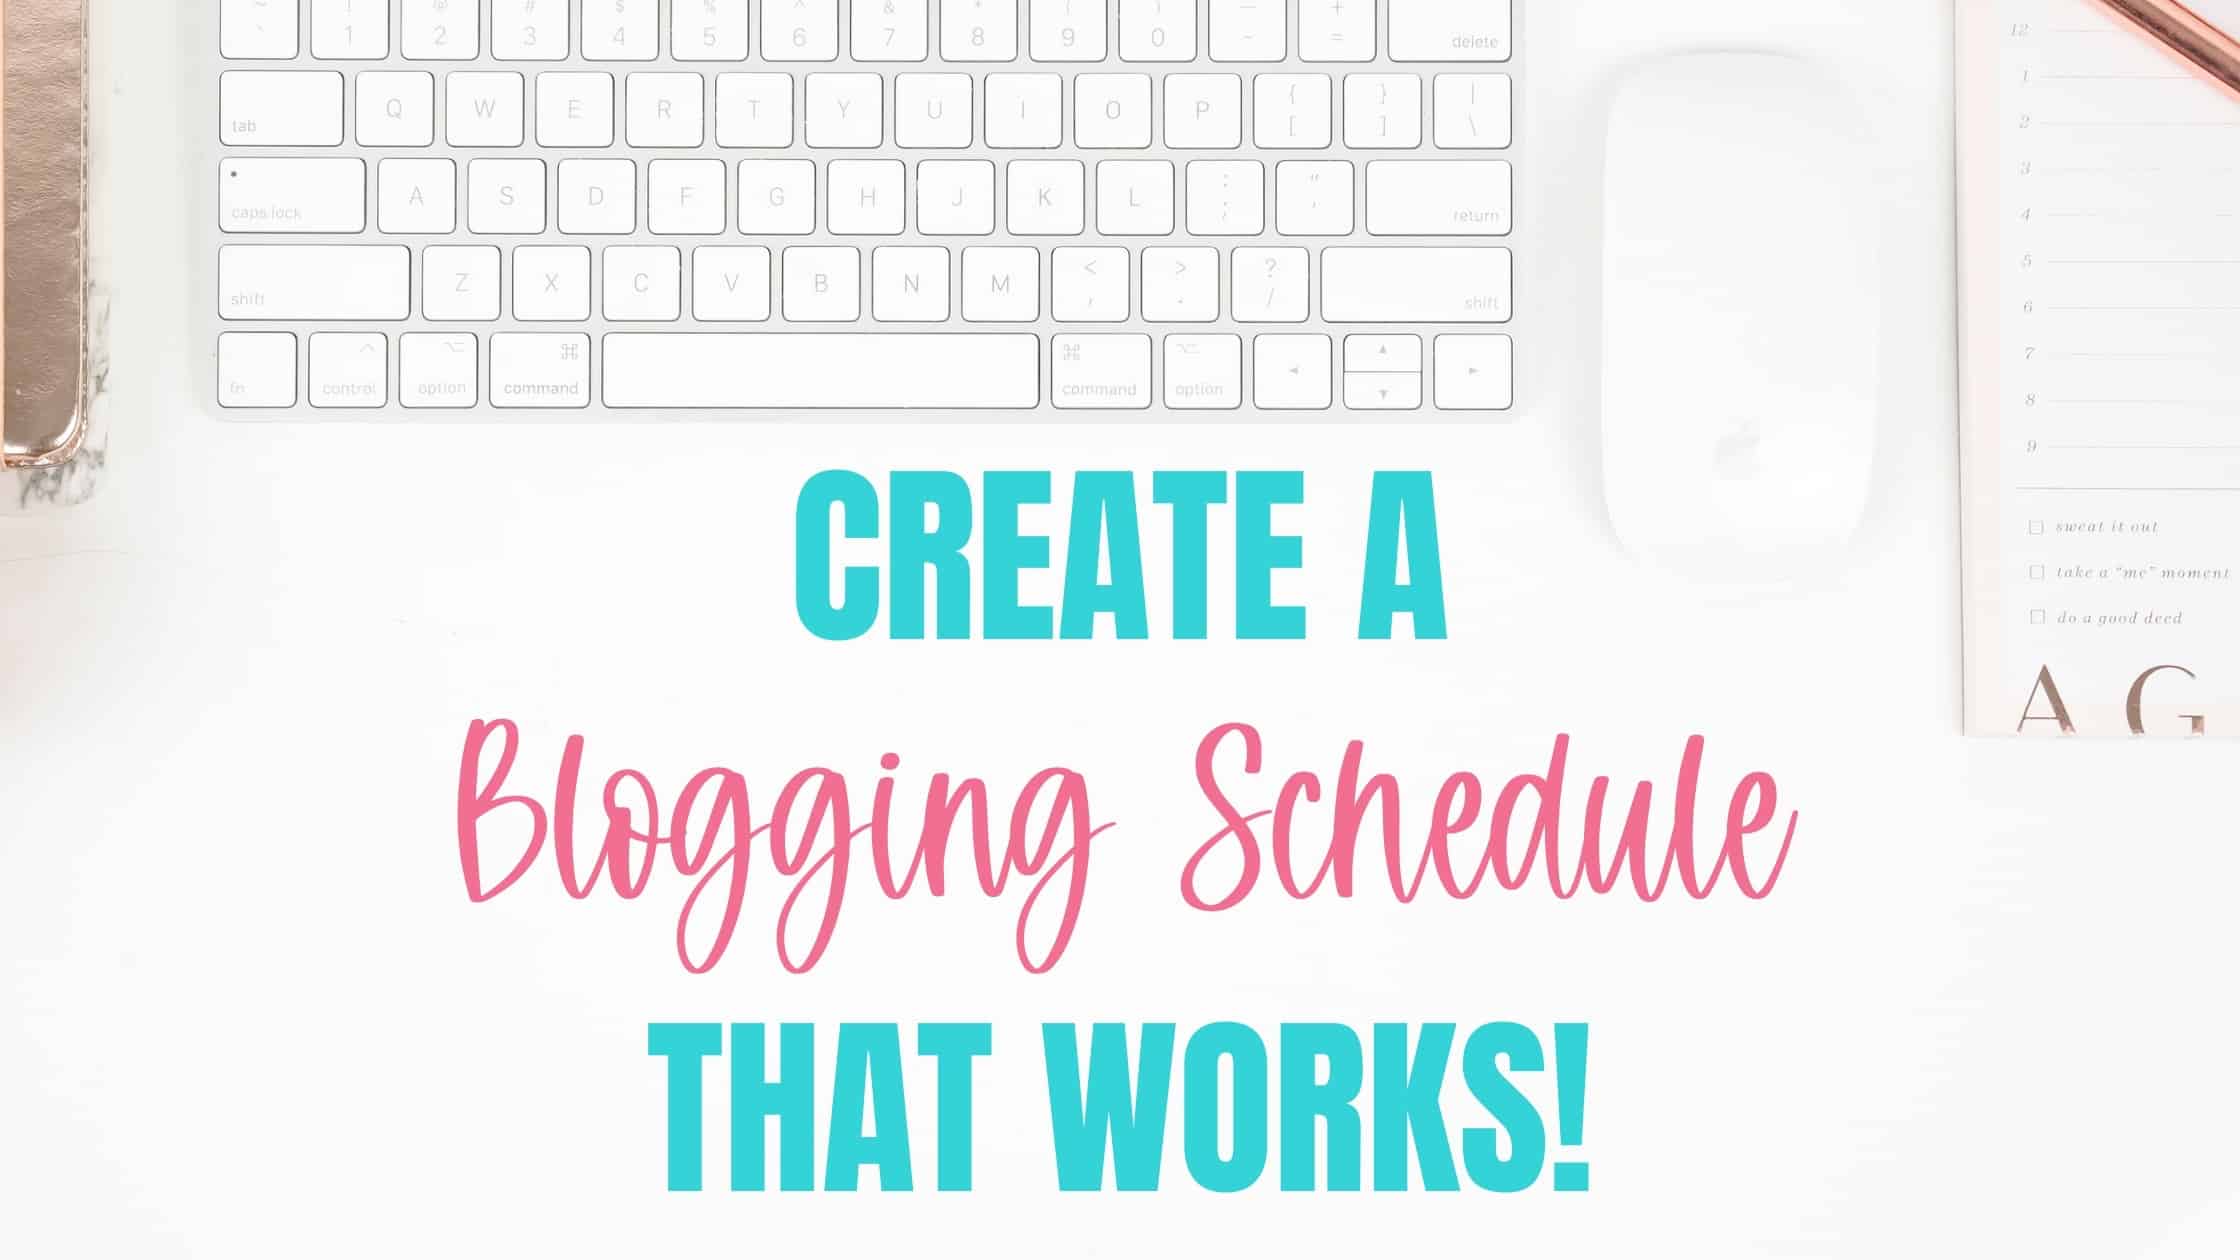 Create a Blogging Schedule That Works!